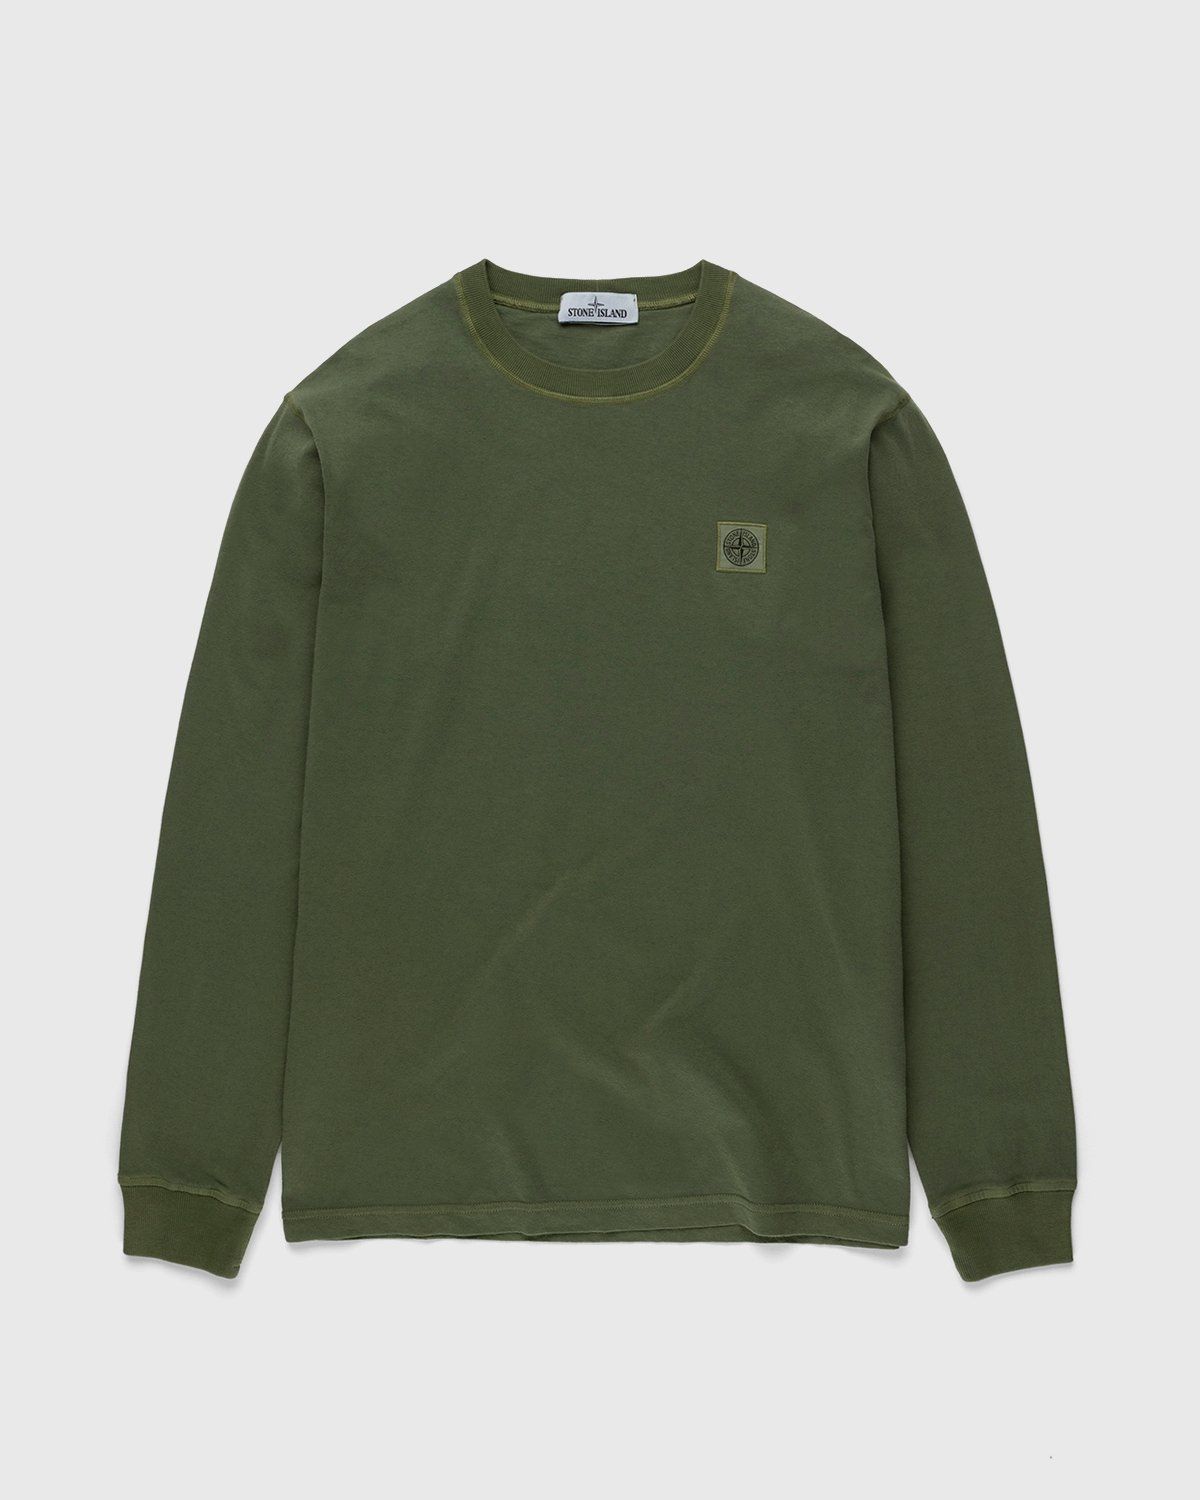 Stone Island – 21857 Garment-Dyed Fissato T-Shirt Olive Green - Image 1